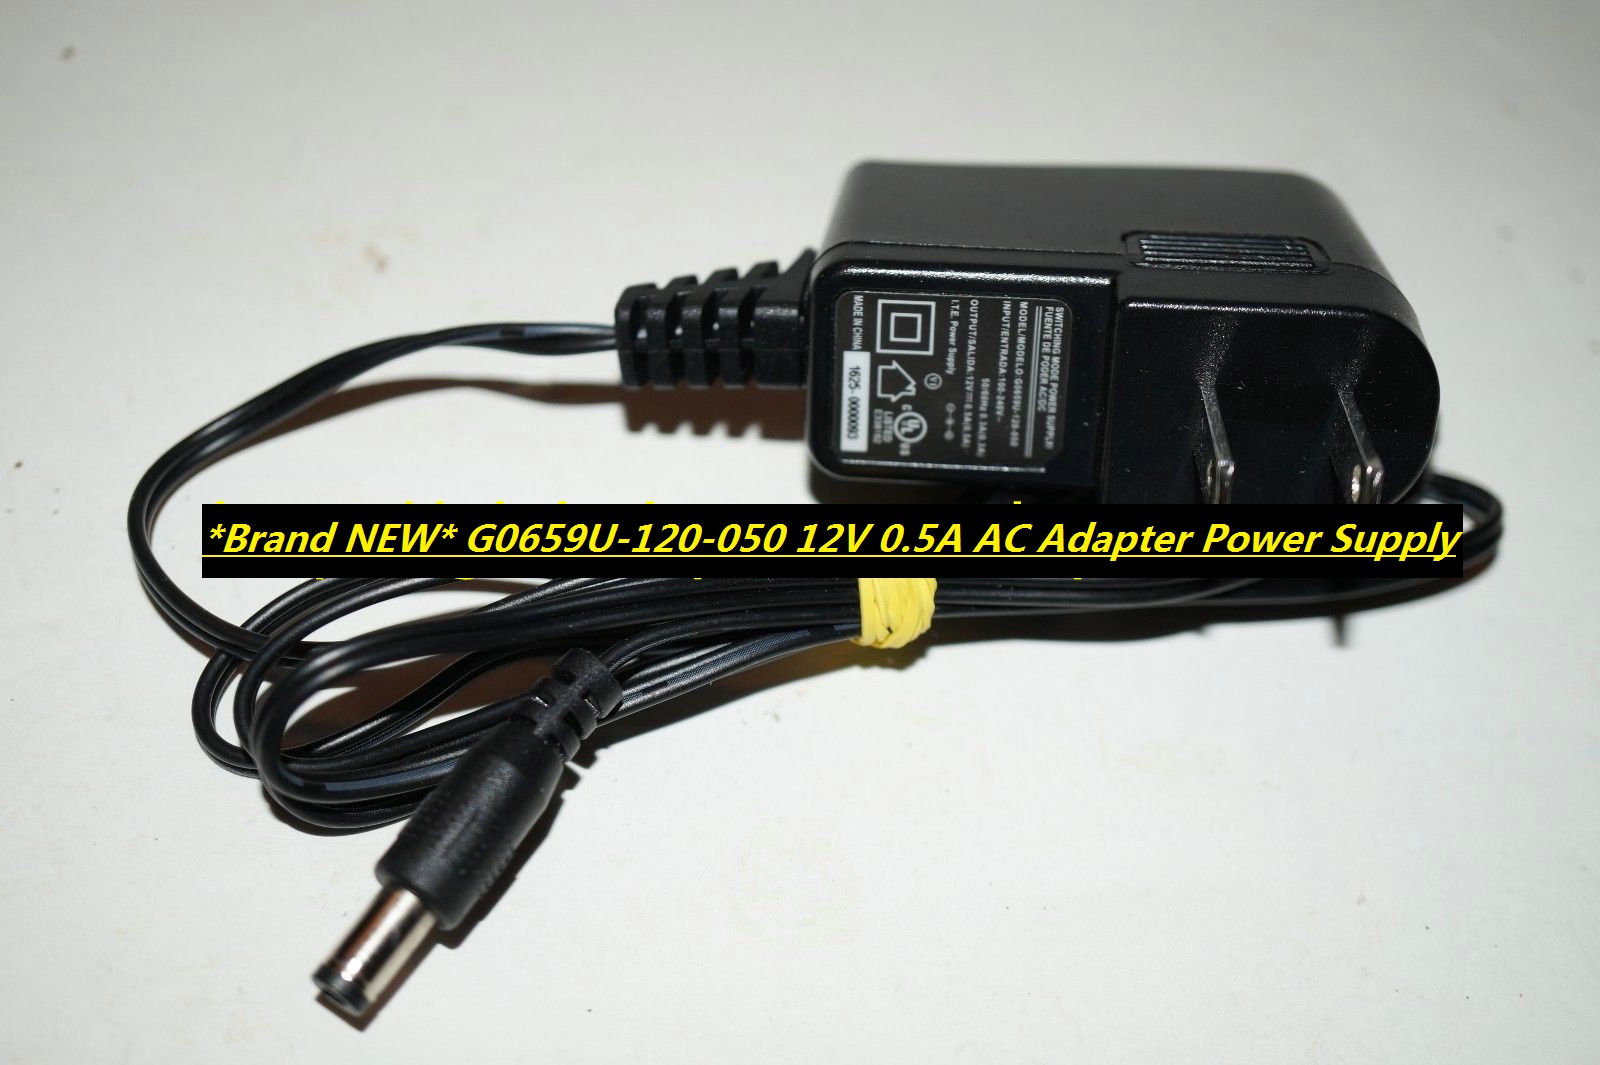 *Brand NEW* G0659U-120-050 12V 0.5A AC Adapter Power Supply - Click Image to Close